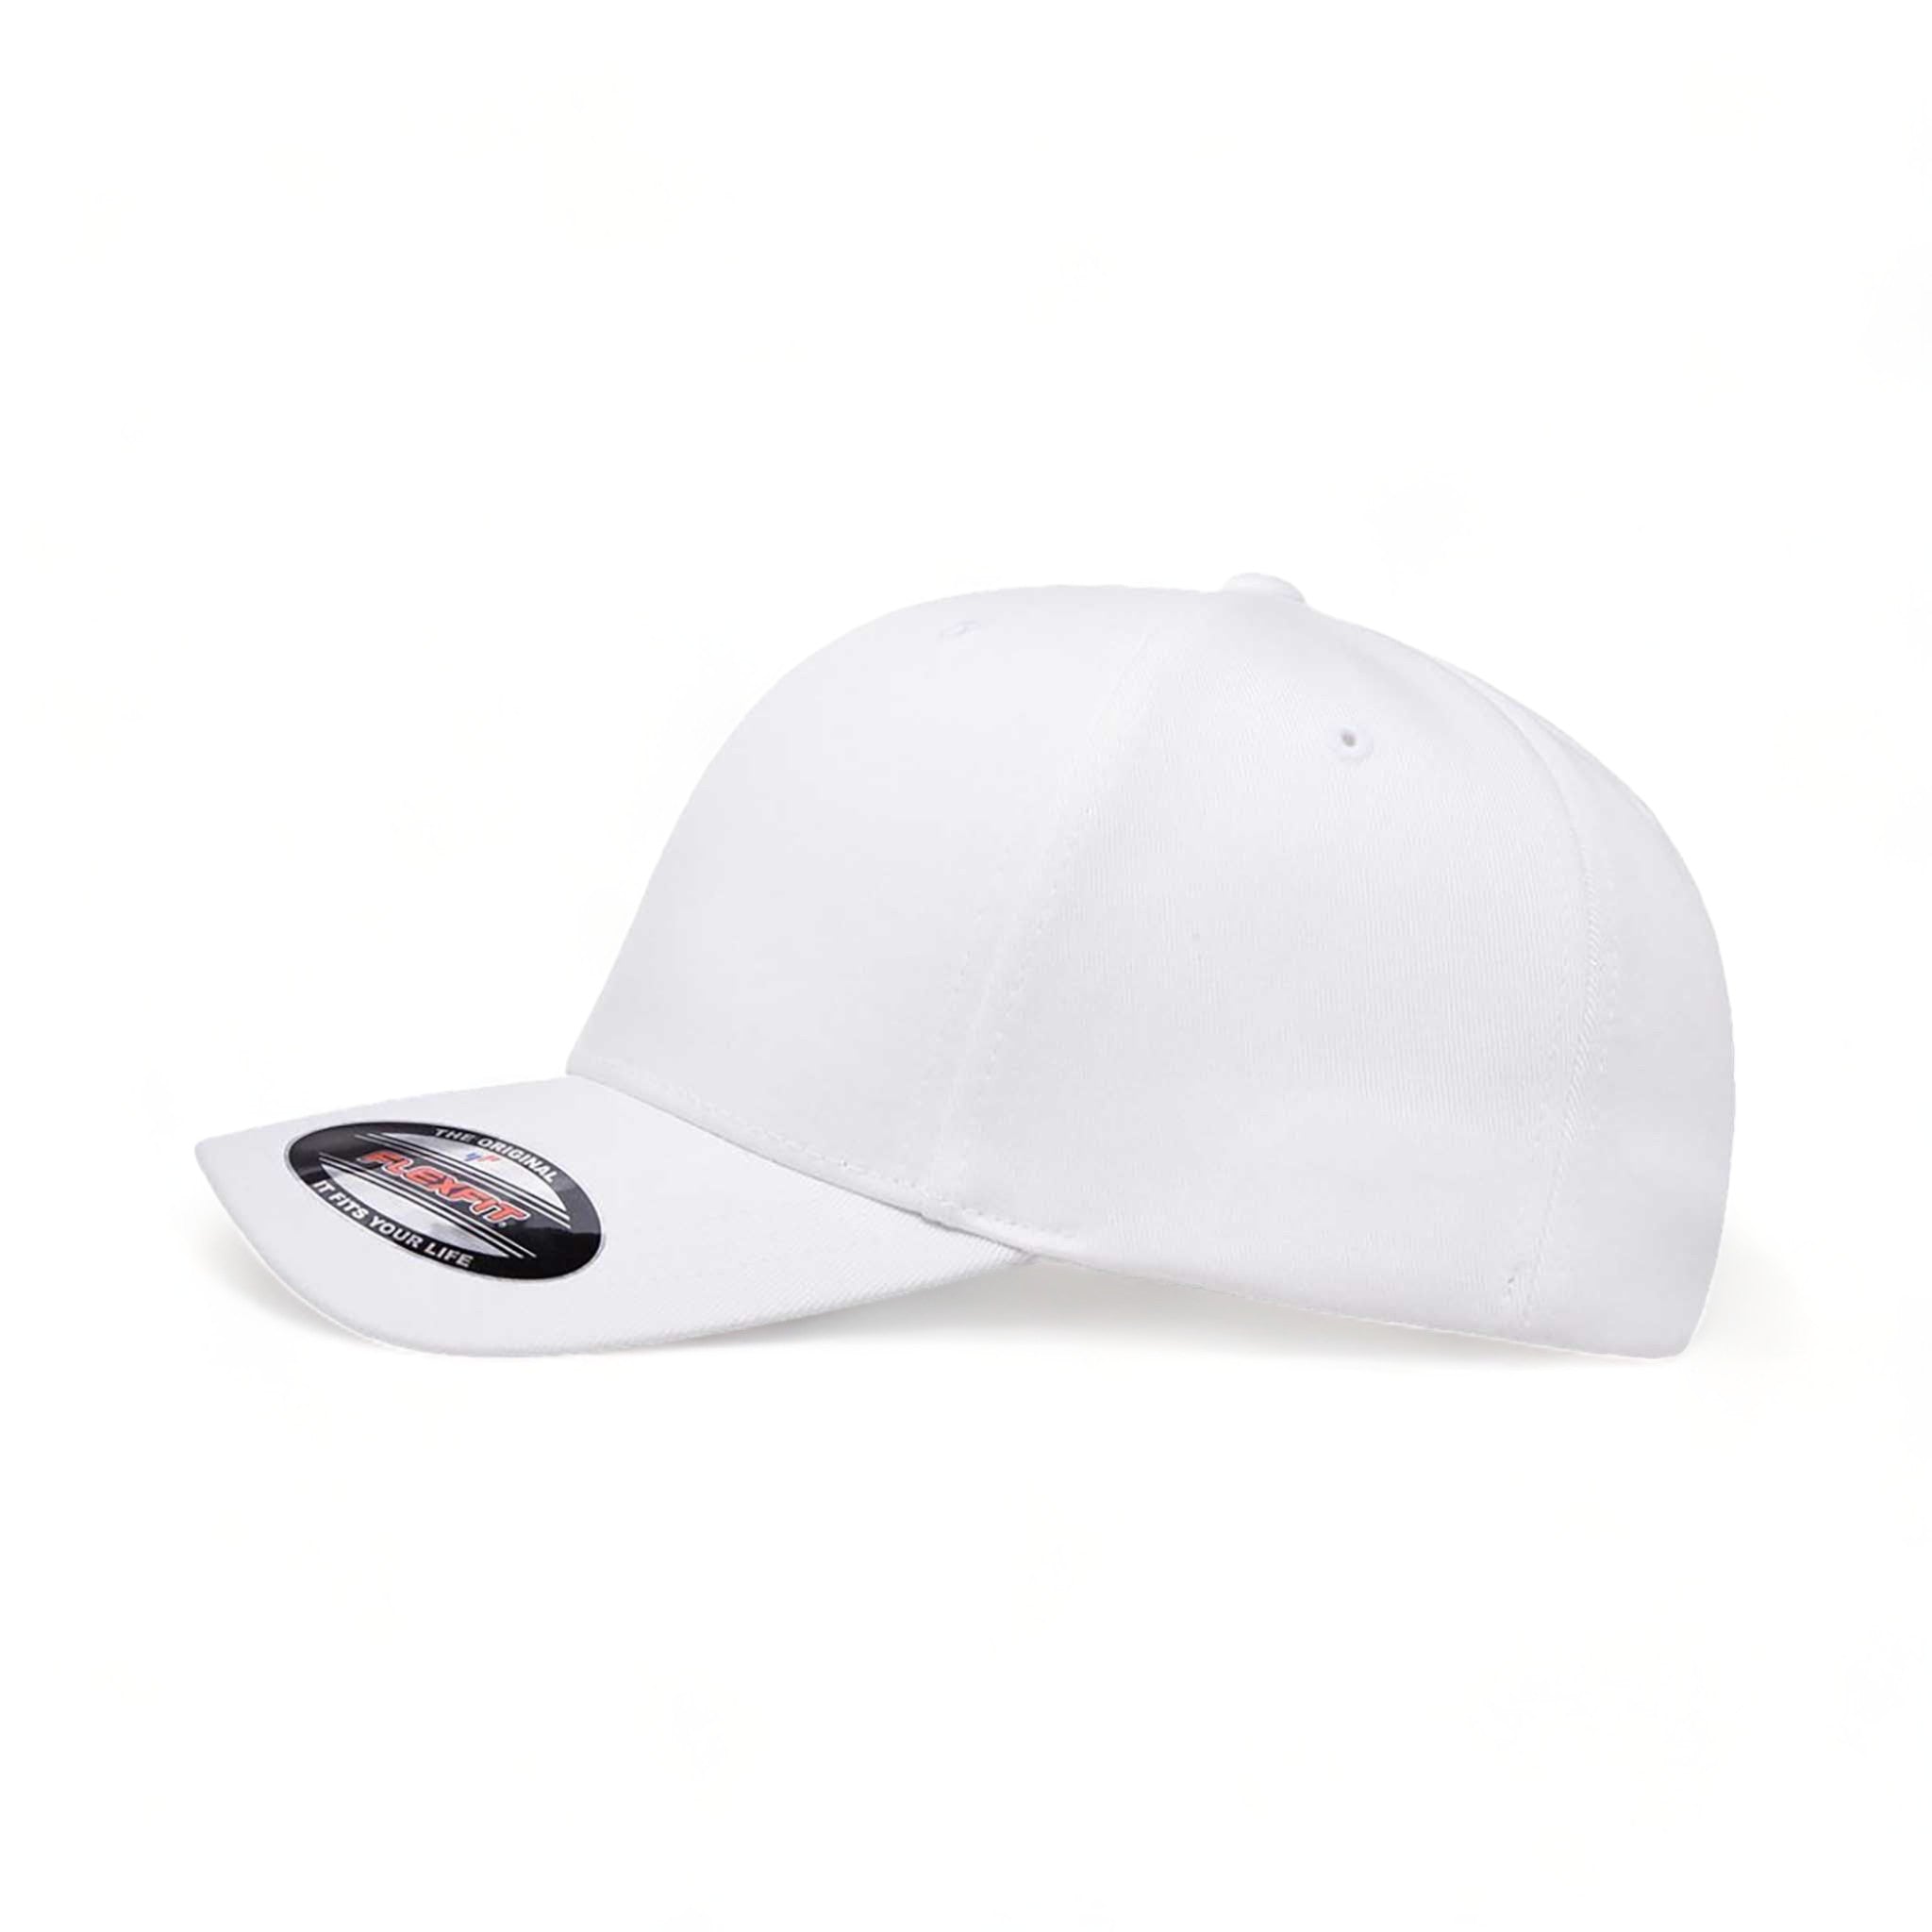 Side view of Flexfit 6277 custom hat in white